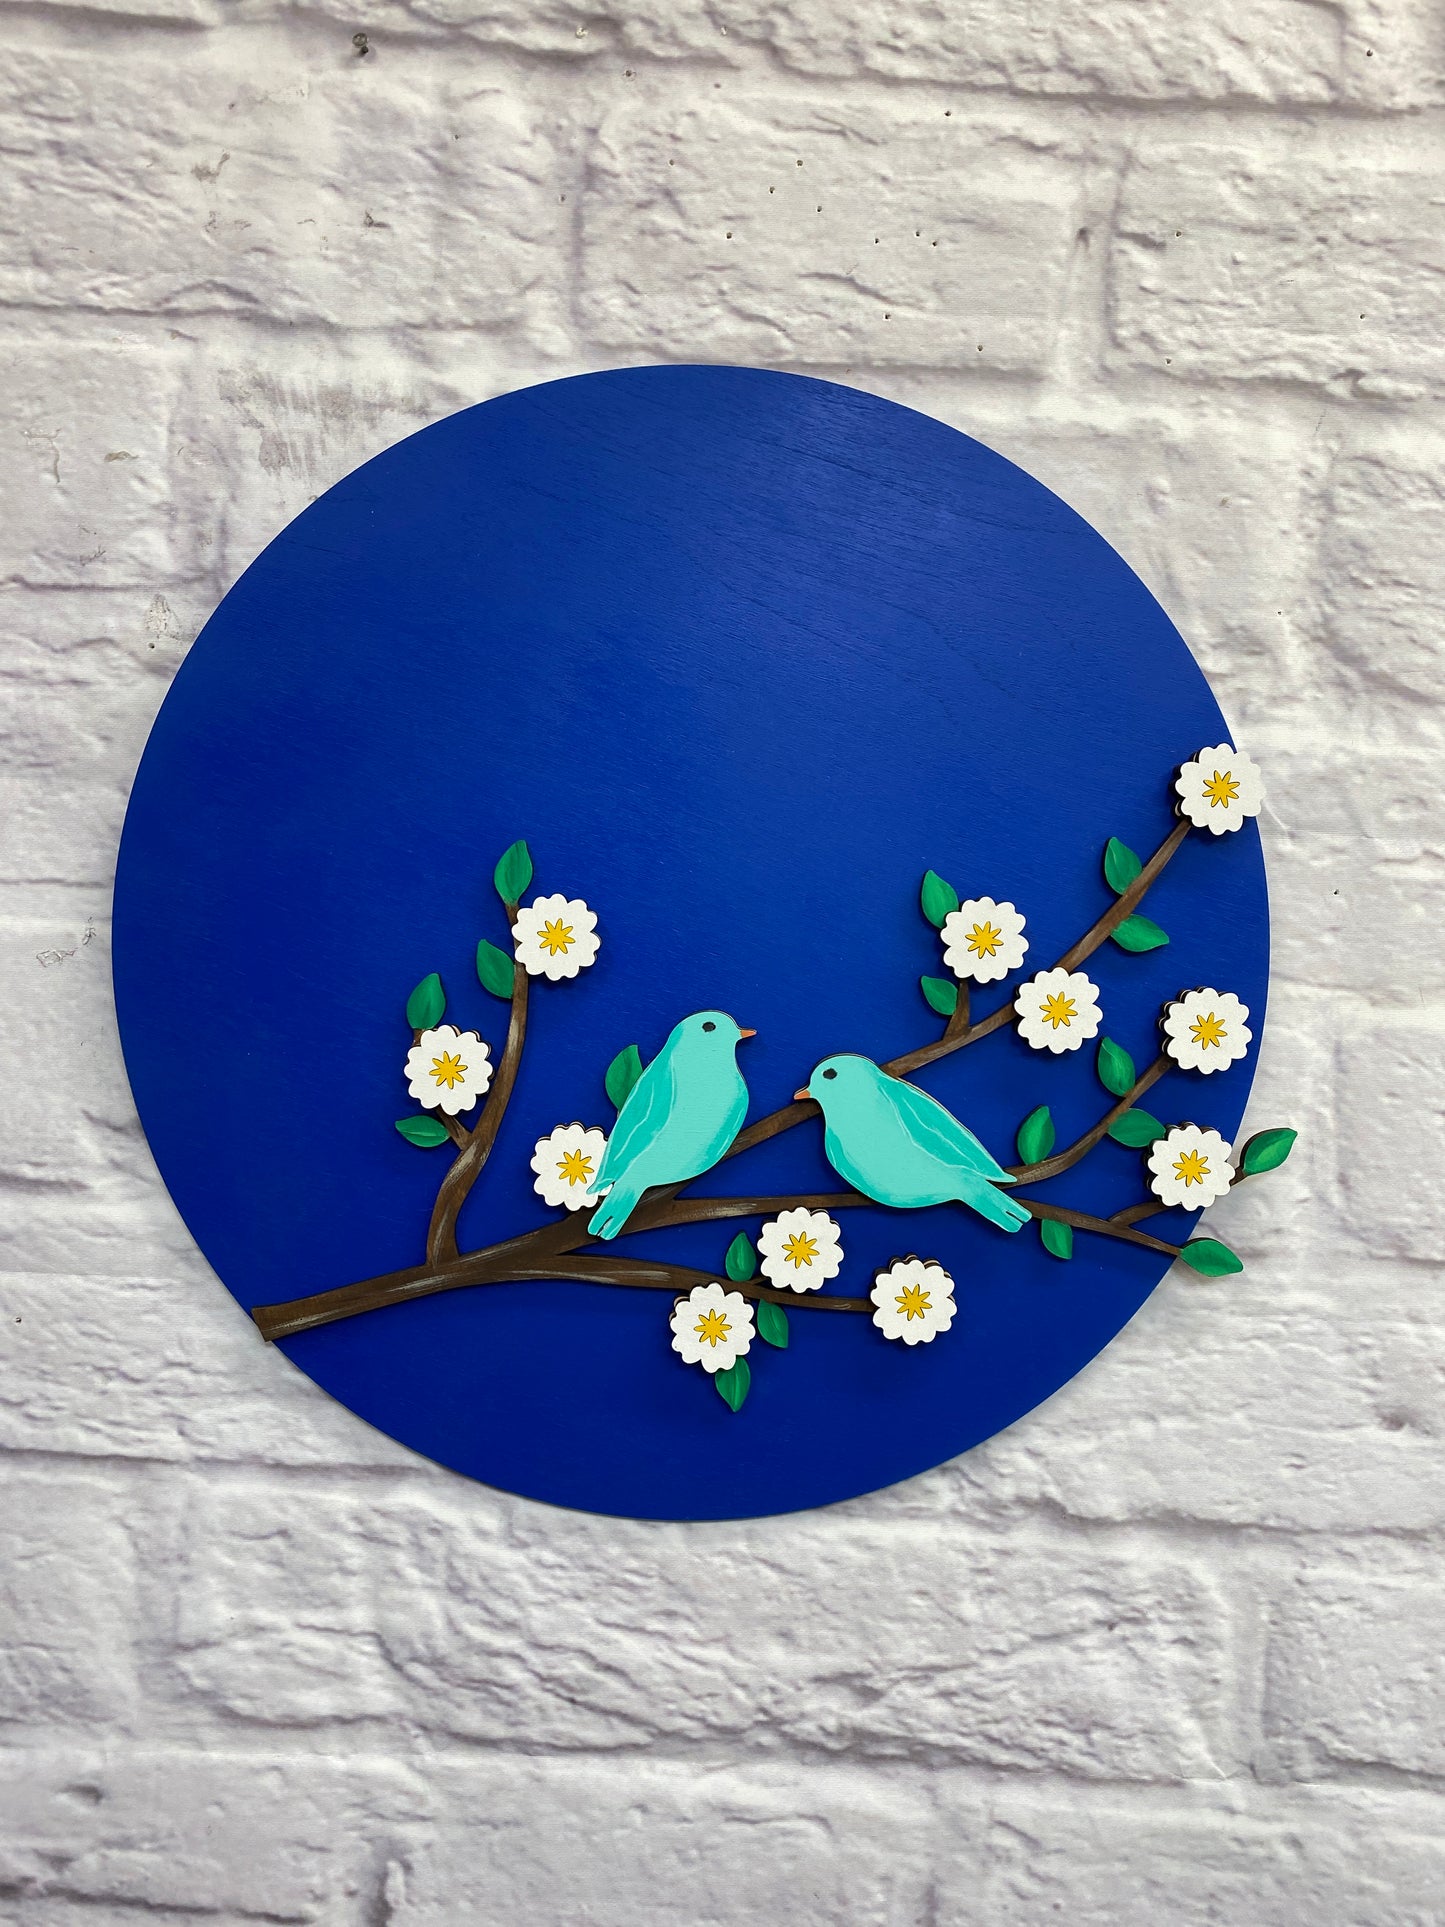 Birds on a Limb / Birds in Bloom Door Hanger / wall Decor Laser Cut Blank for DIY Project